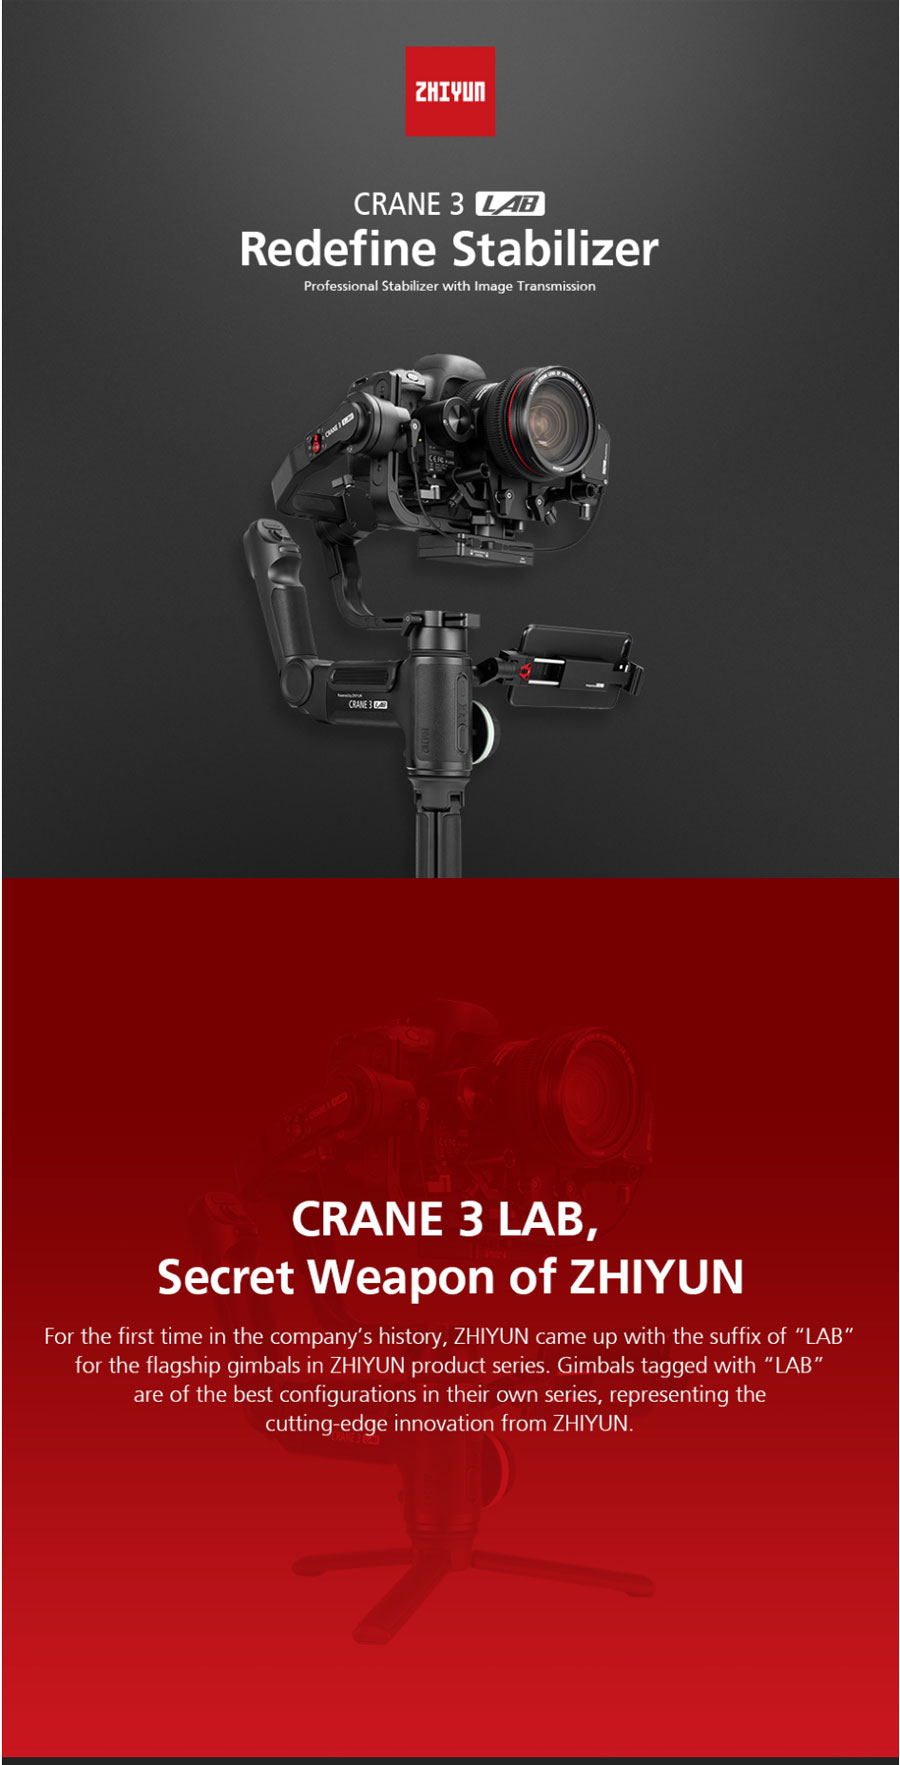 ZHIYUN-Crane-3-LAB-Creator-3-Axis-Handheld-Wireless-1080P-FHD-Image-Transmission-Gimbal-Stabilizer-f-1594654